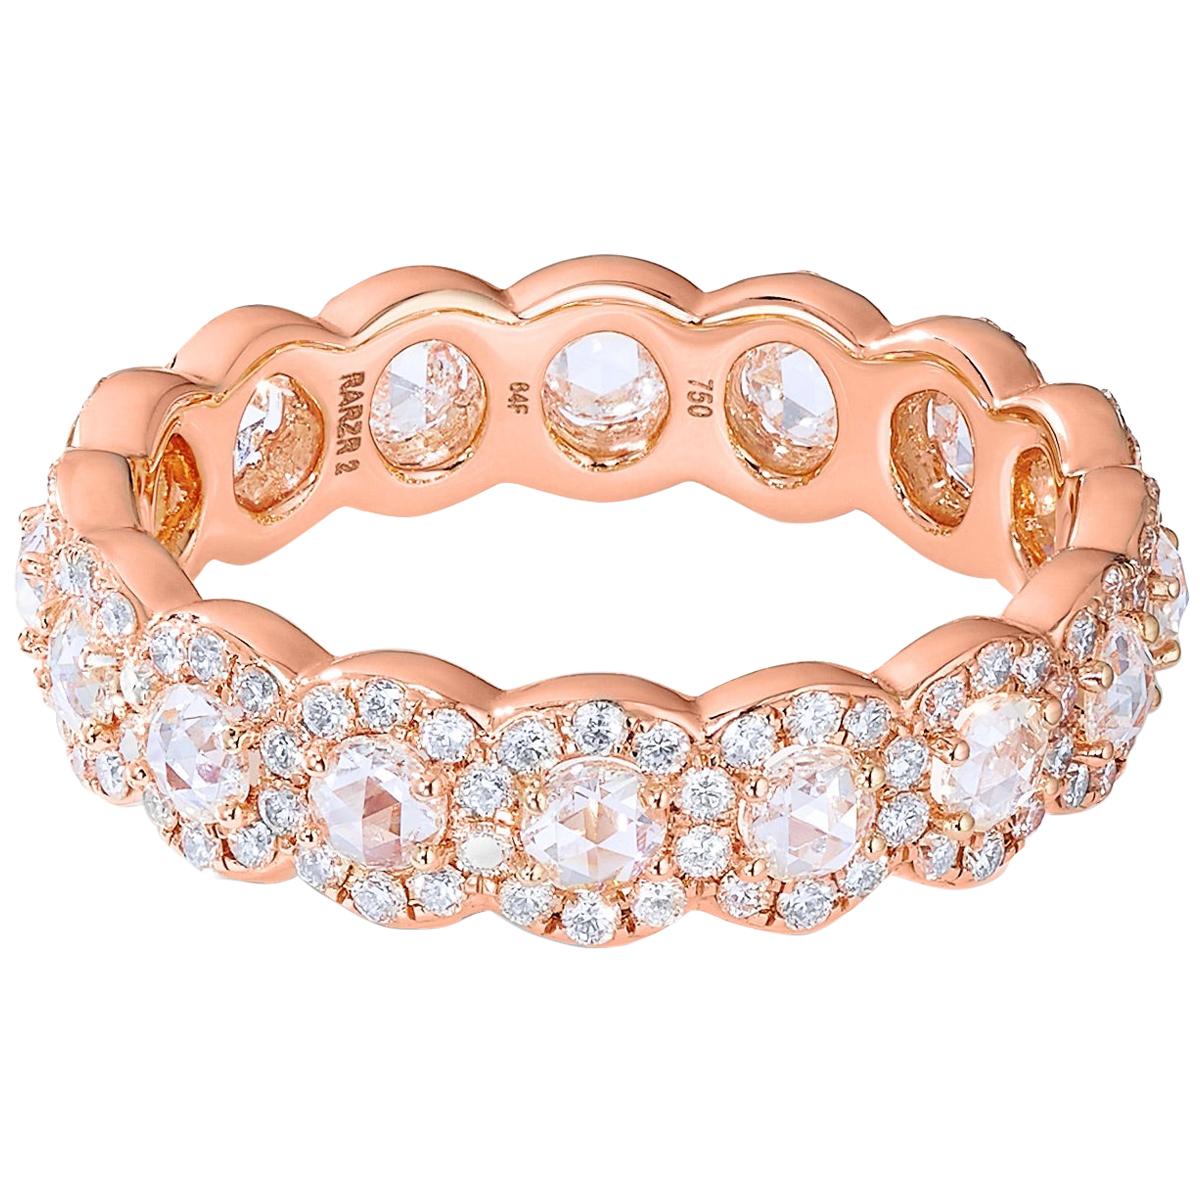 64 Facets 1.50 Carat Rose Cut Diamond Ring in 18 Karat Rose Gold Diamond Band For Sale